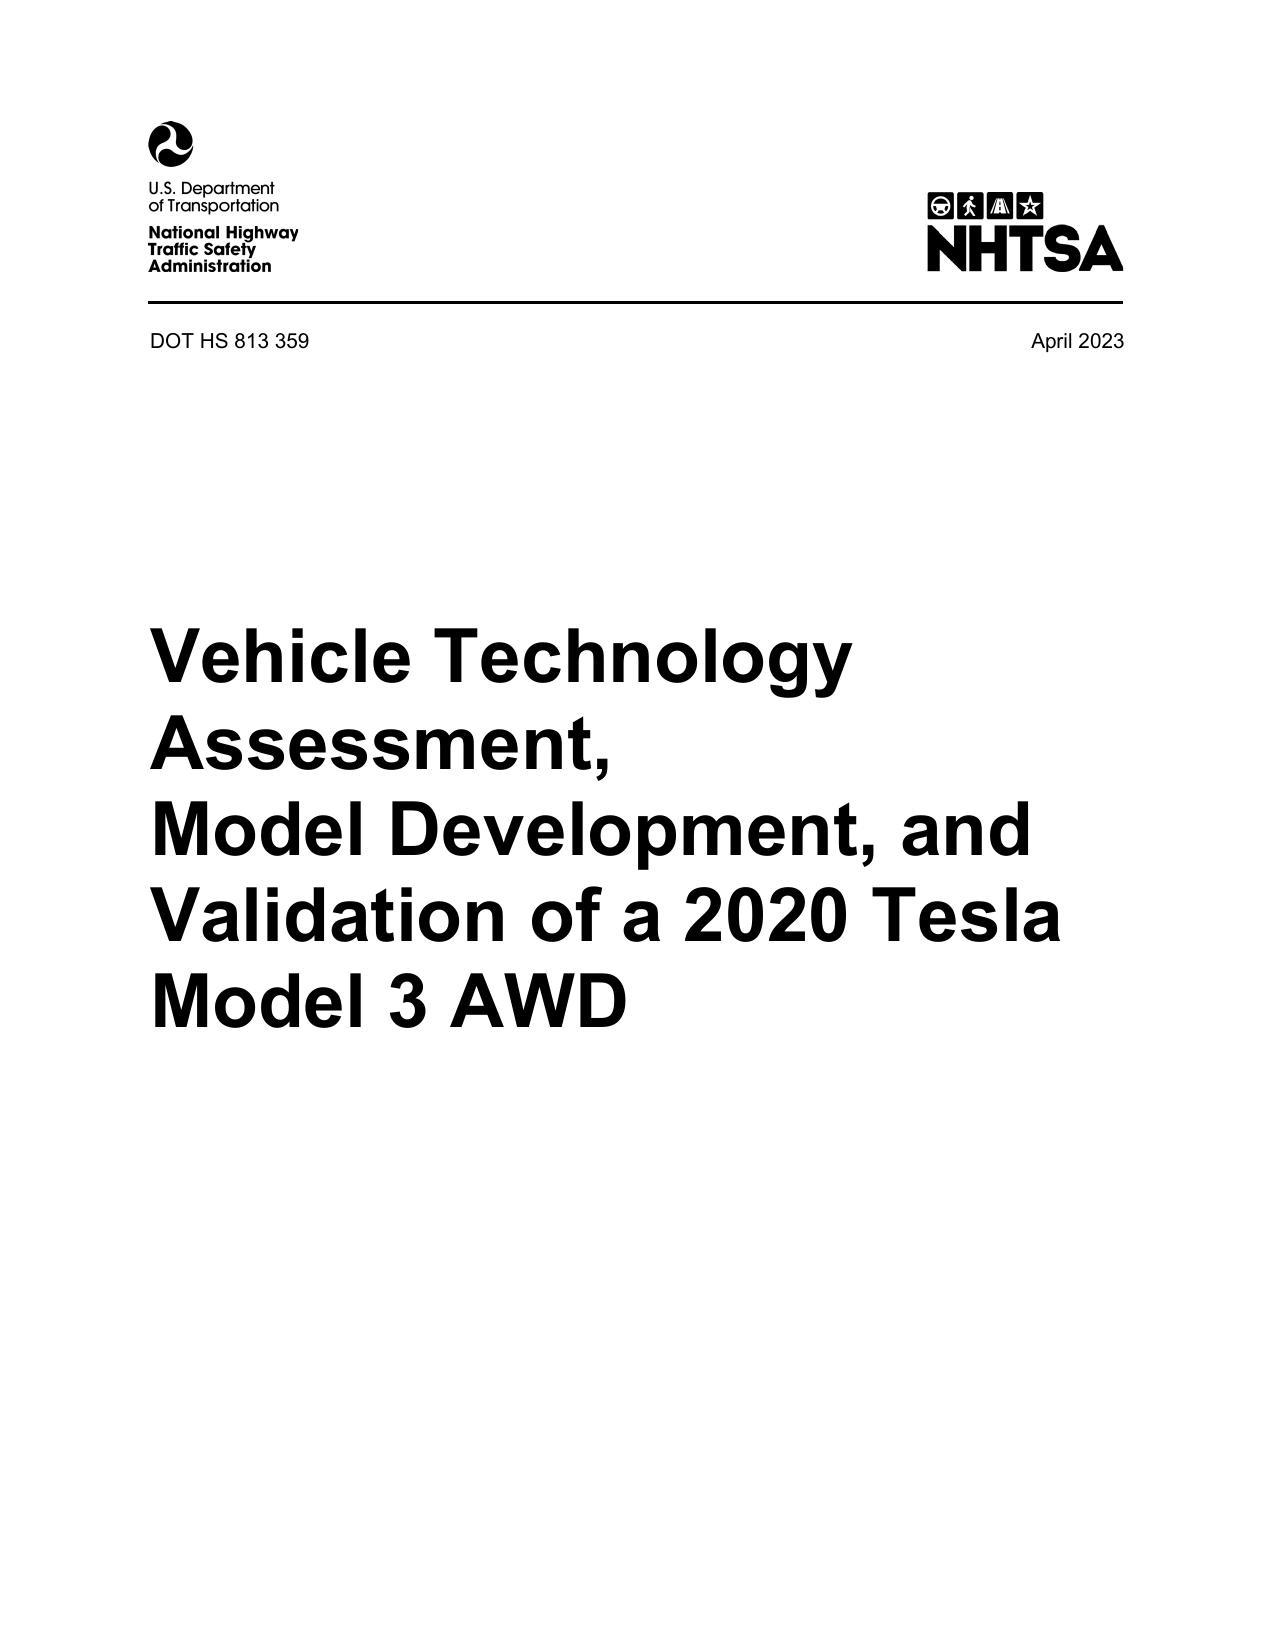 vehicle-technology-assessment-model-development-and-validation-of-a-2020-tesla-model-3-awd.pdf